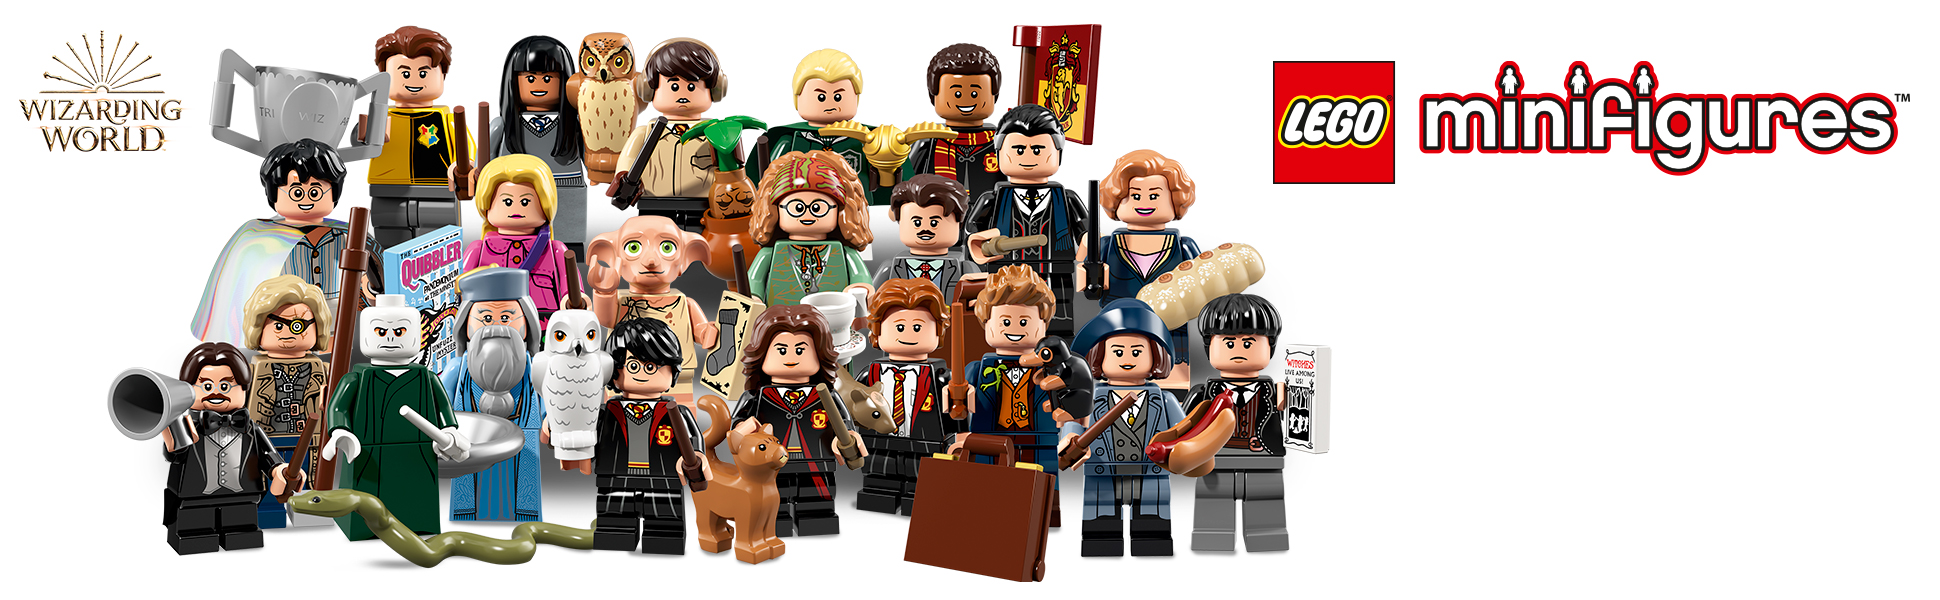 LEGO Harry Potter minifigures stocking filler christmas